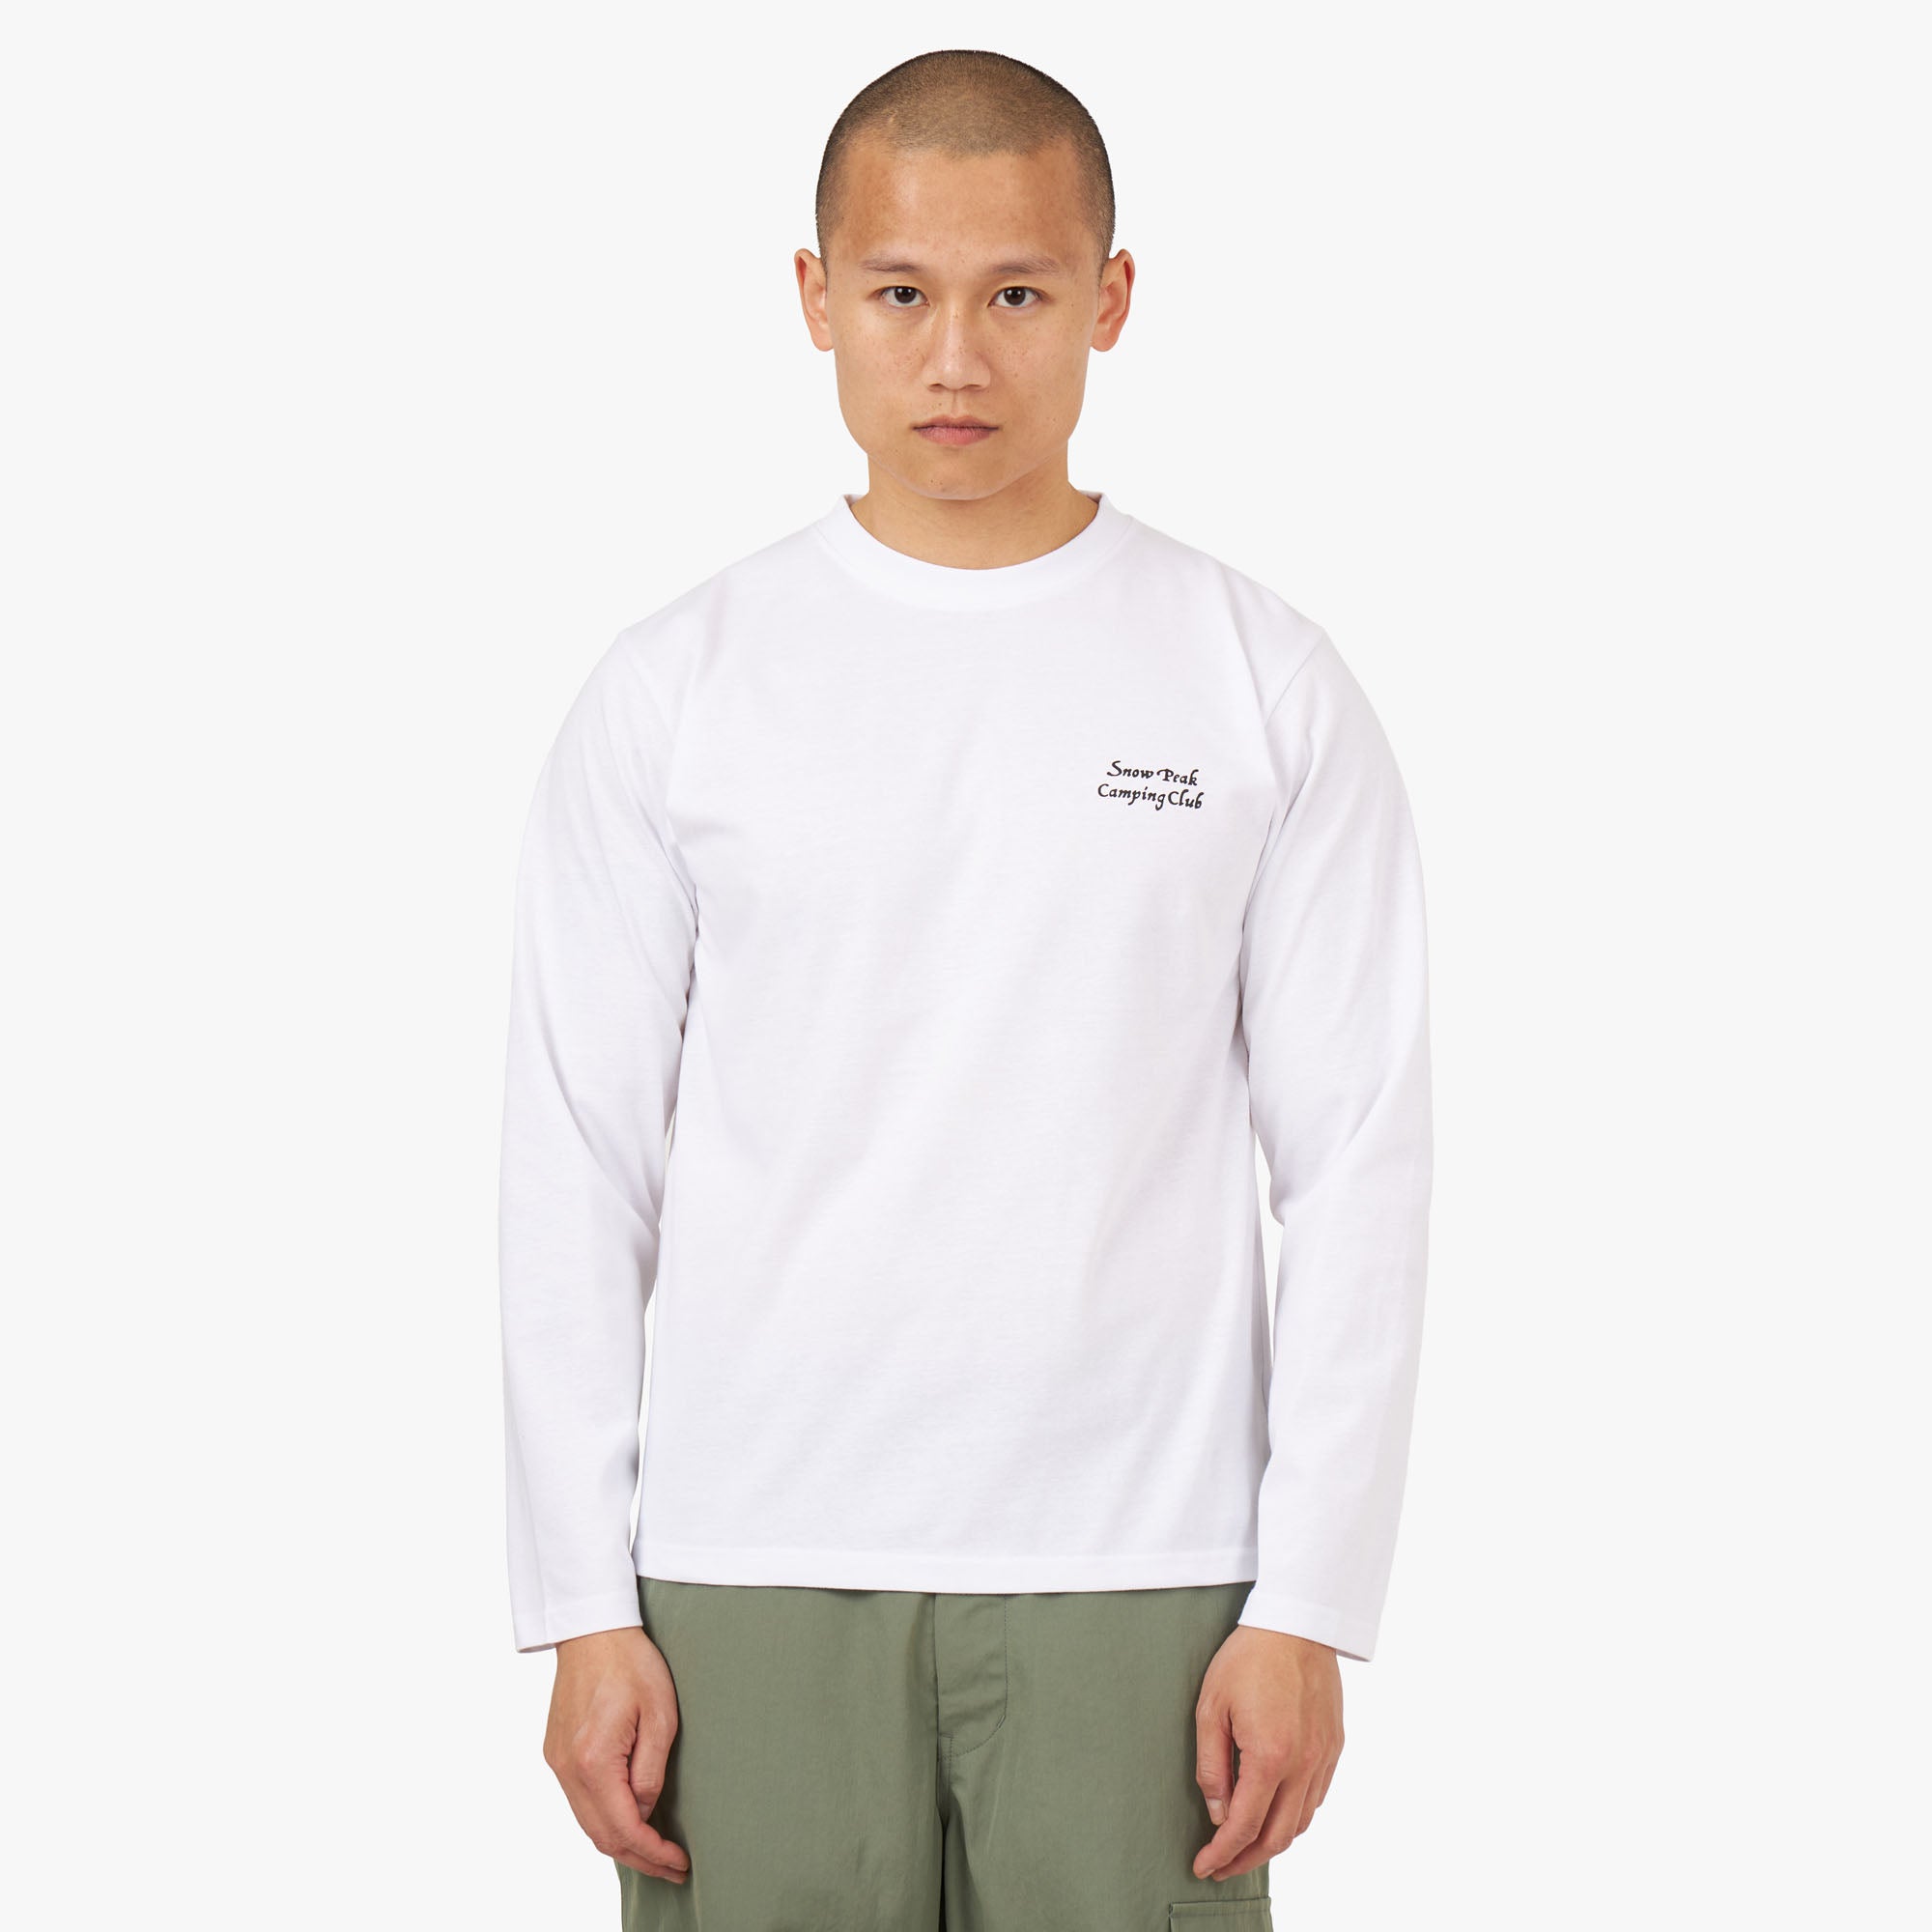 Snow Peak Camping Club Long Sleeve T-shirt / White 1